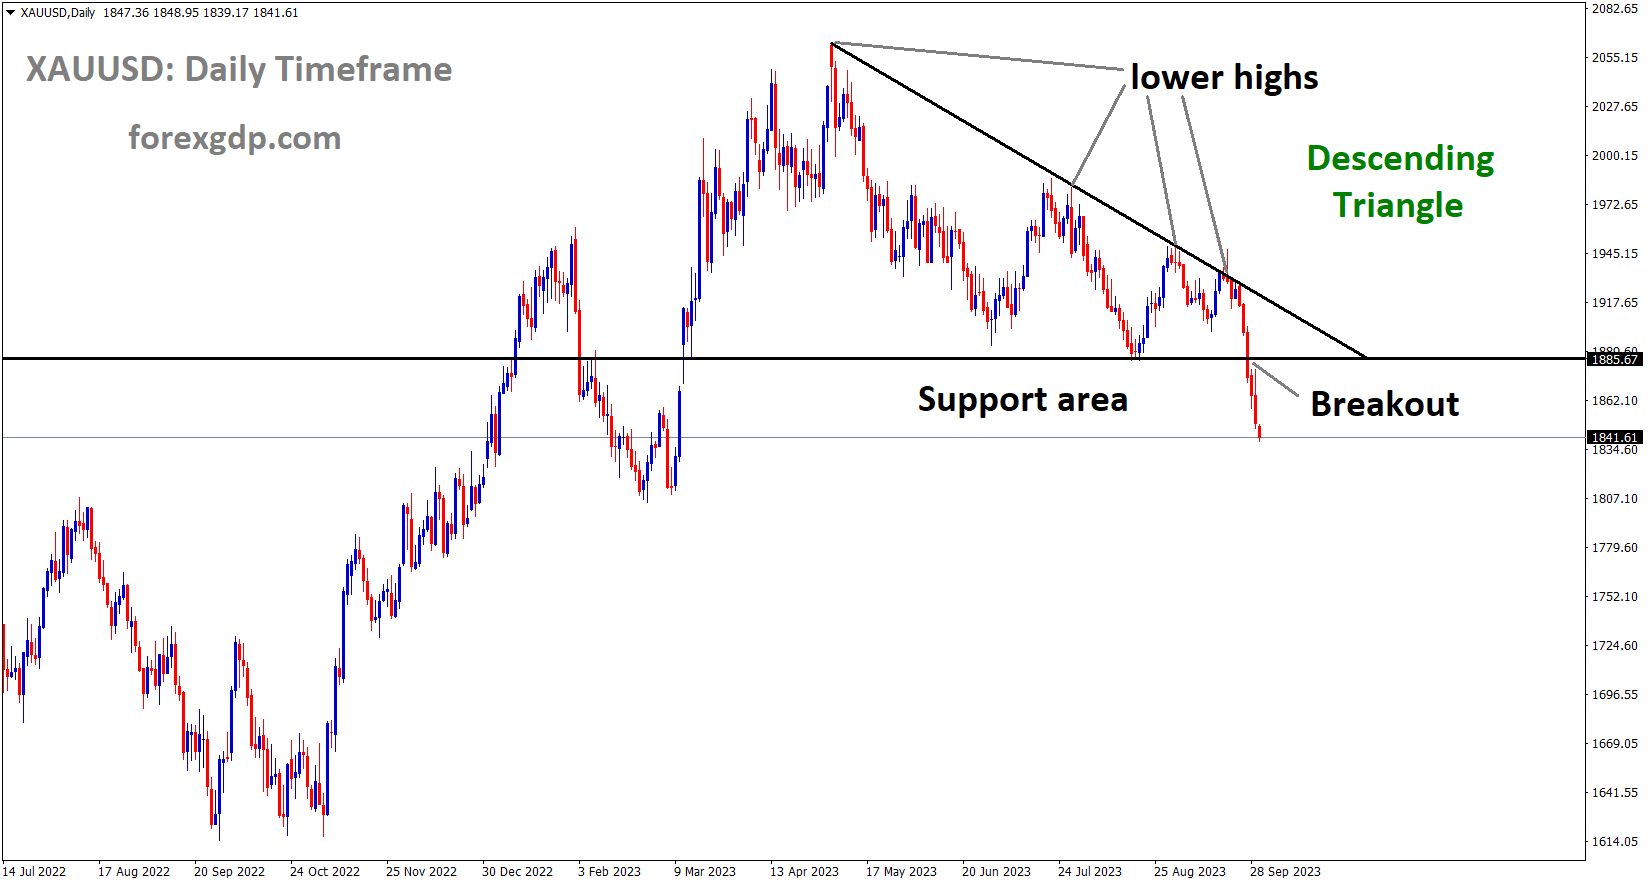 XAUUSD Gold price has broken the Descending triangle pattern indownside